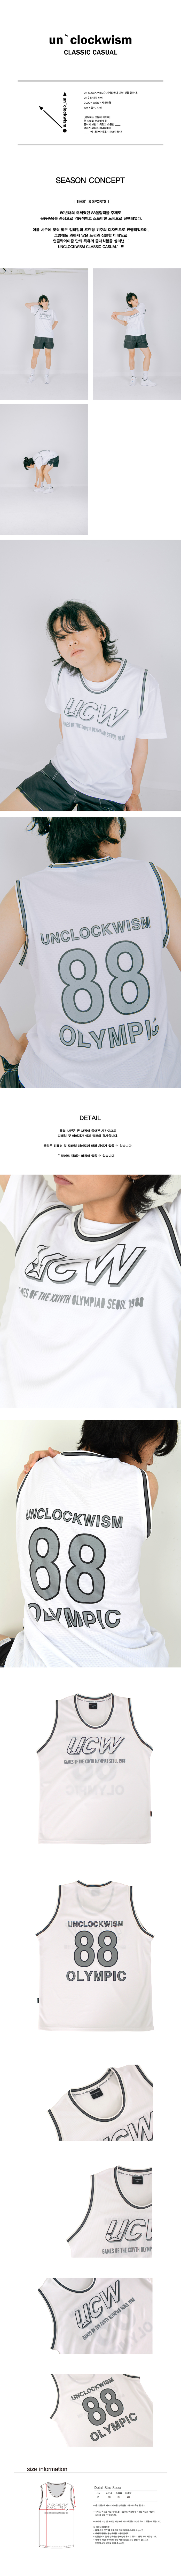 UCW Olympiad Printing Mesh Sleeveless shirt_grey.jpg